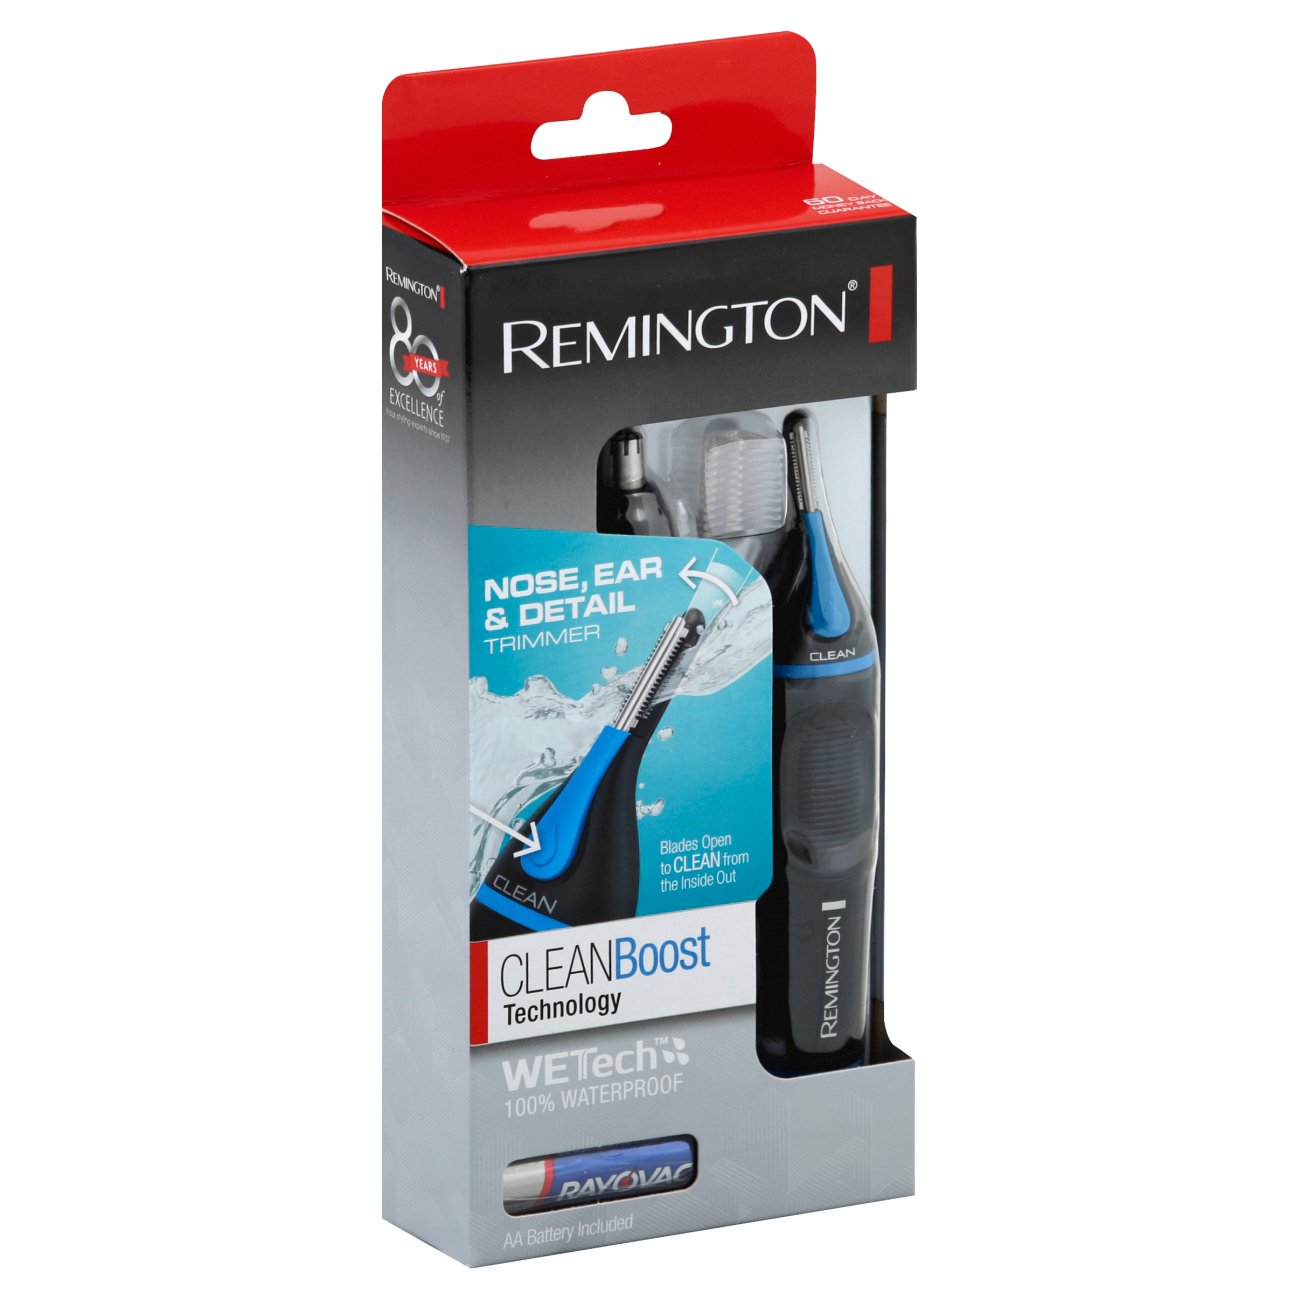 remington smart nose & ear clipper